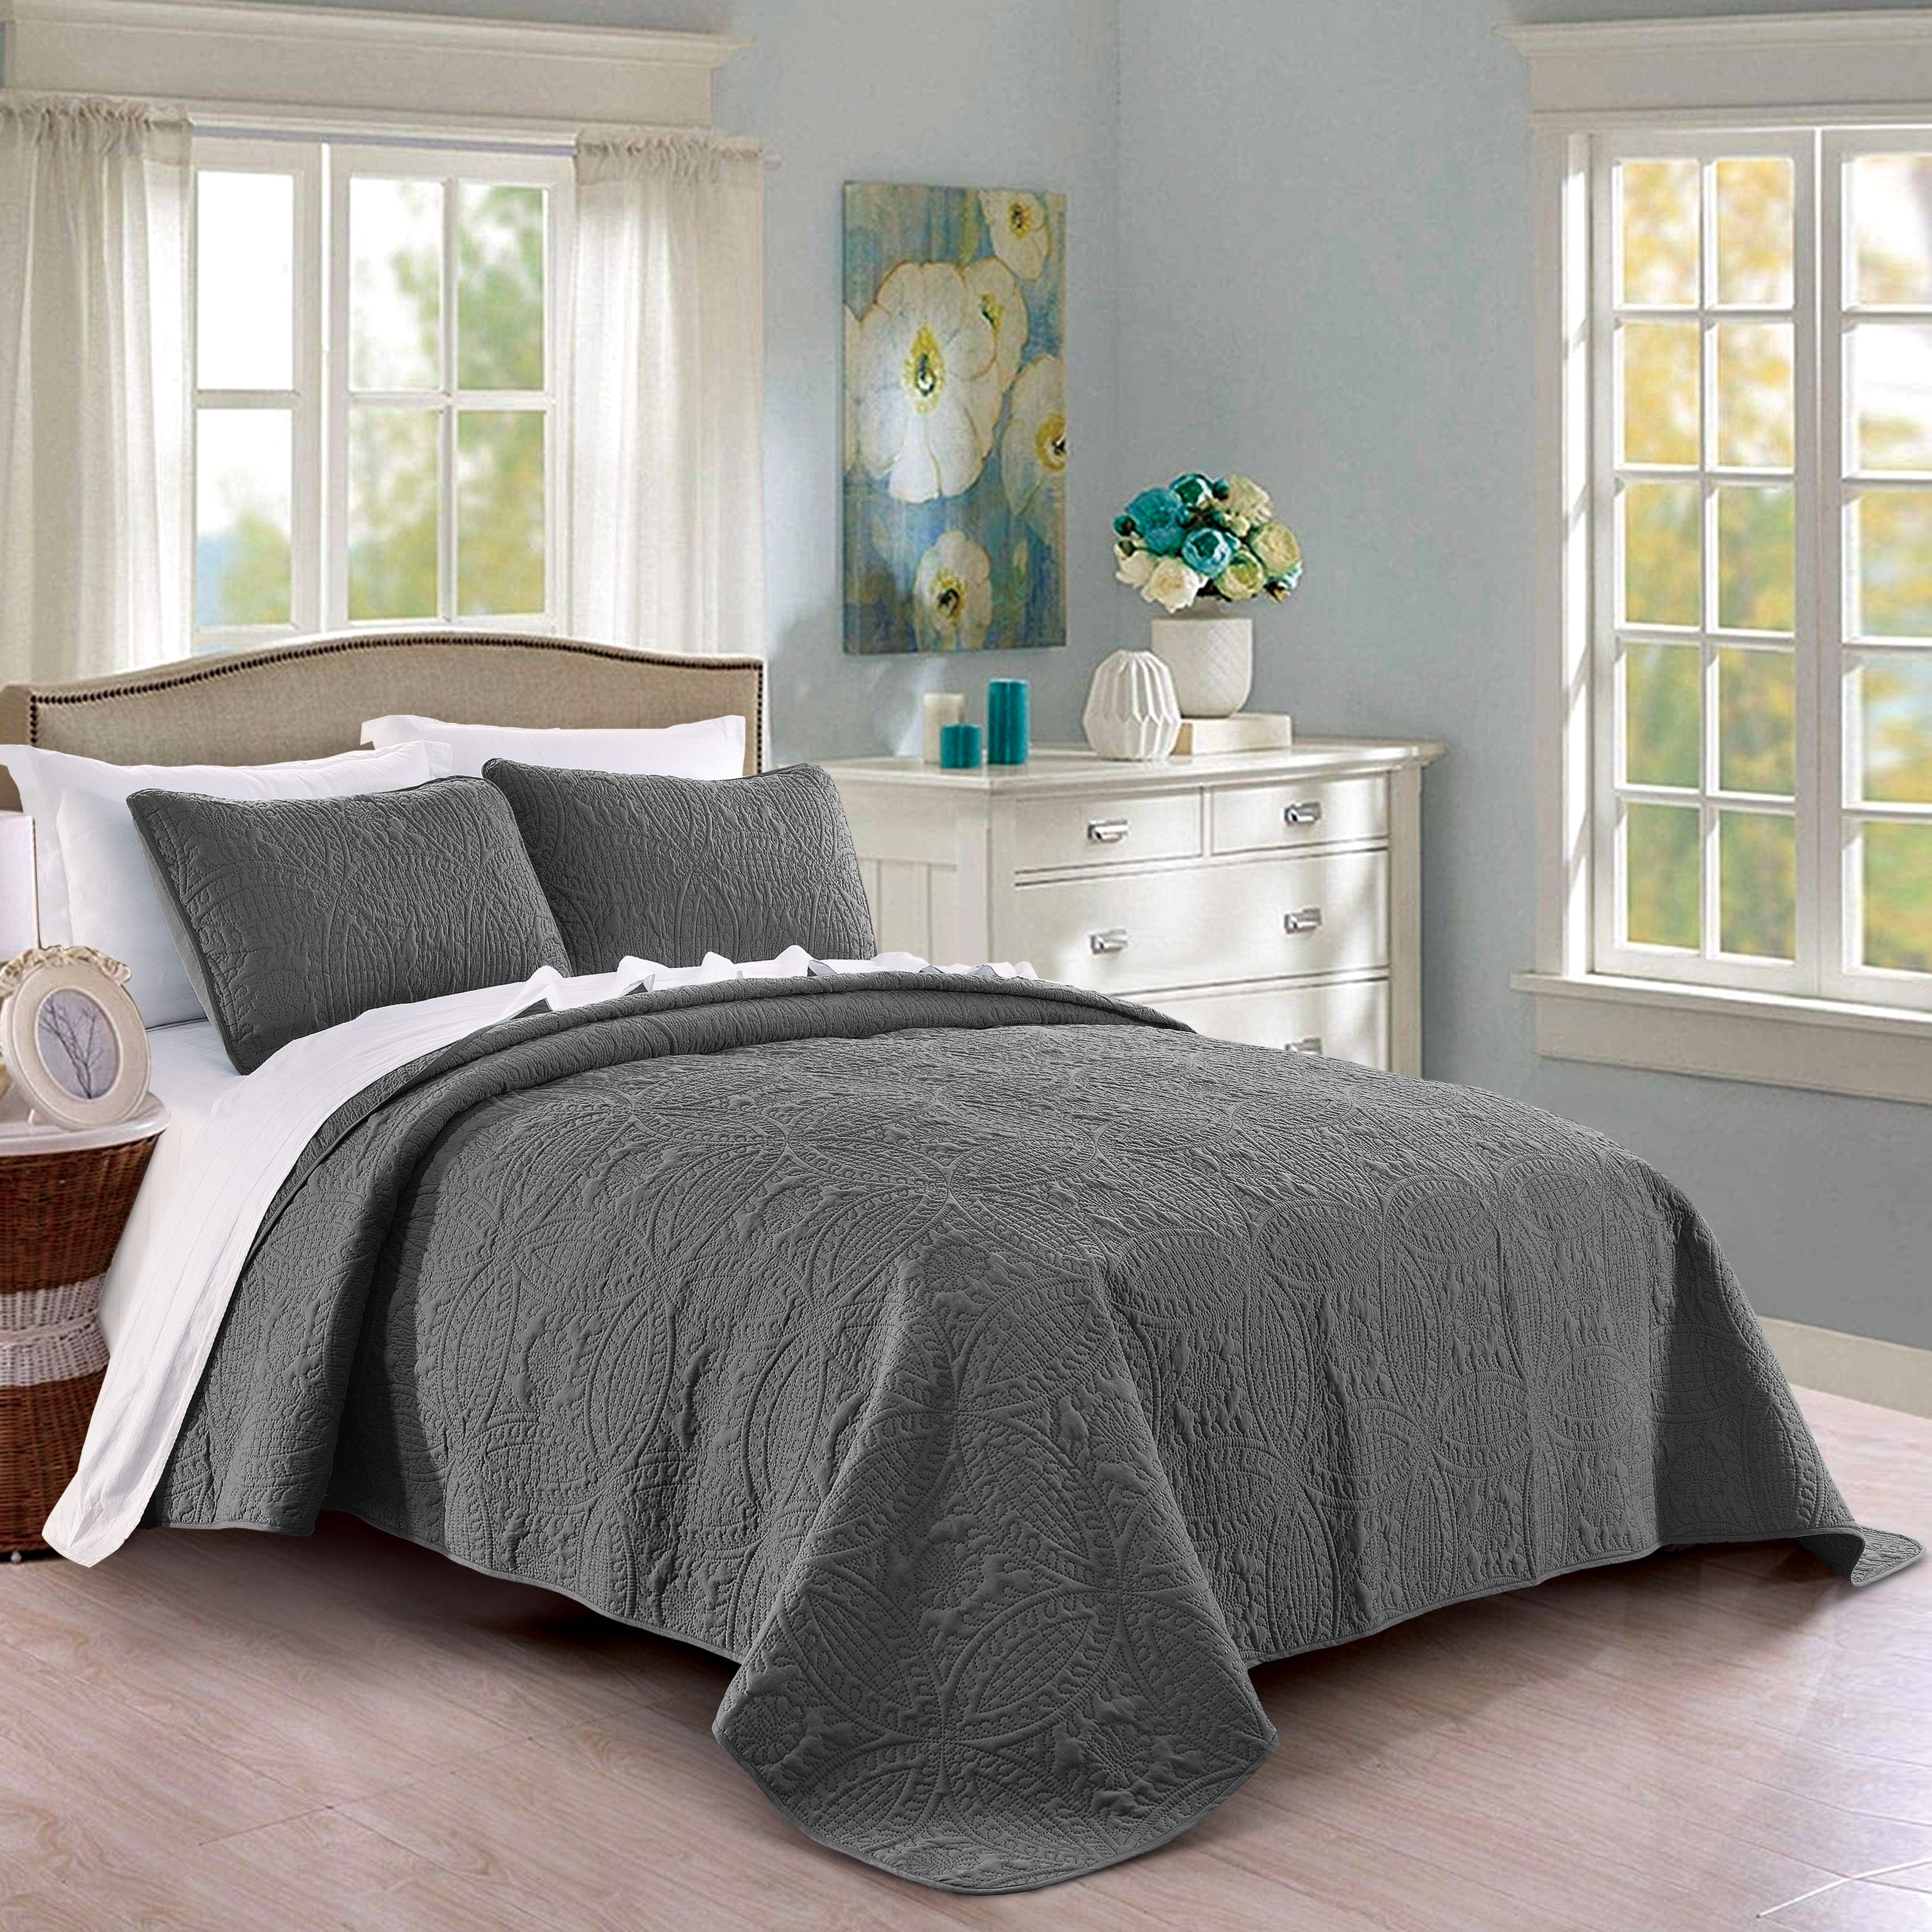 2/3 Piece Ultra Soft Jasmine Ruffle Bedding Bedspread Coverlet Quilt Set 